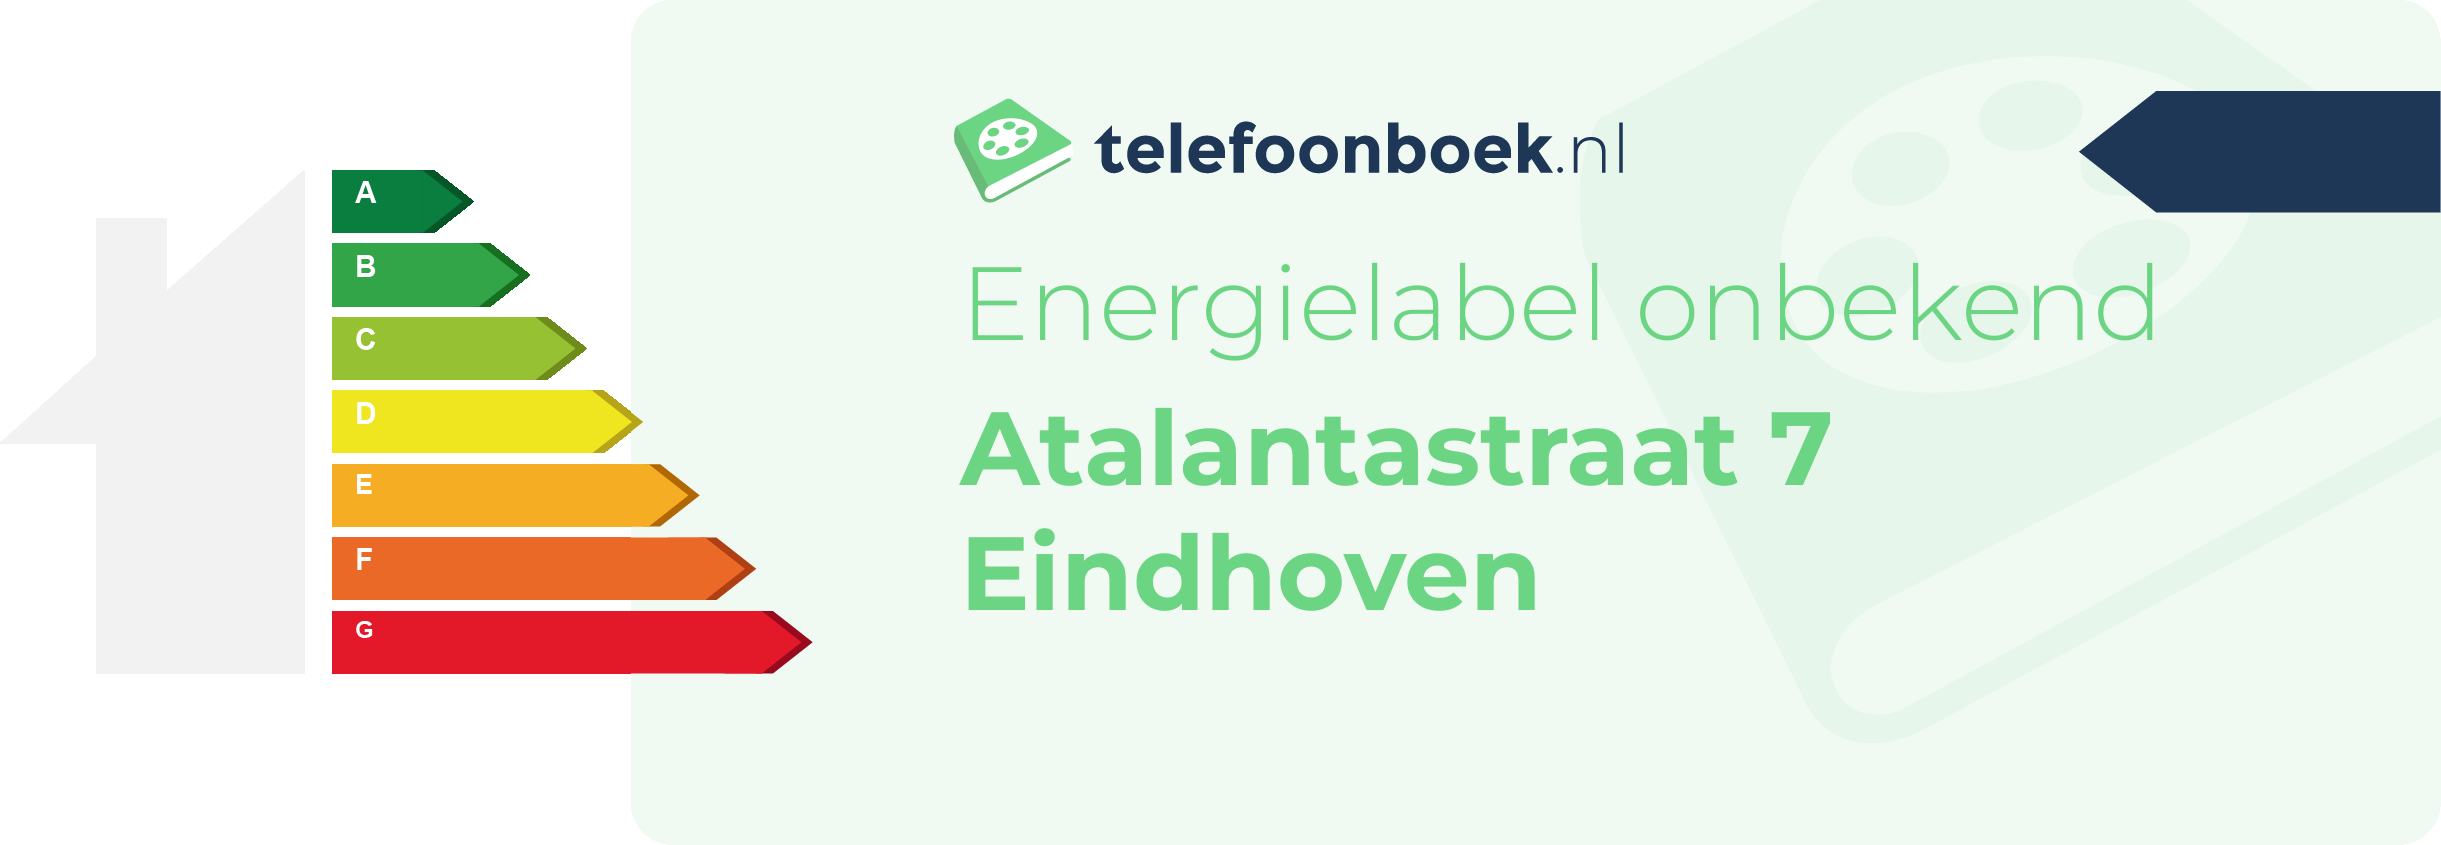 Energielabel Atalantastraat 7 Eindhoven